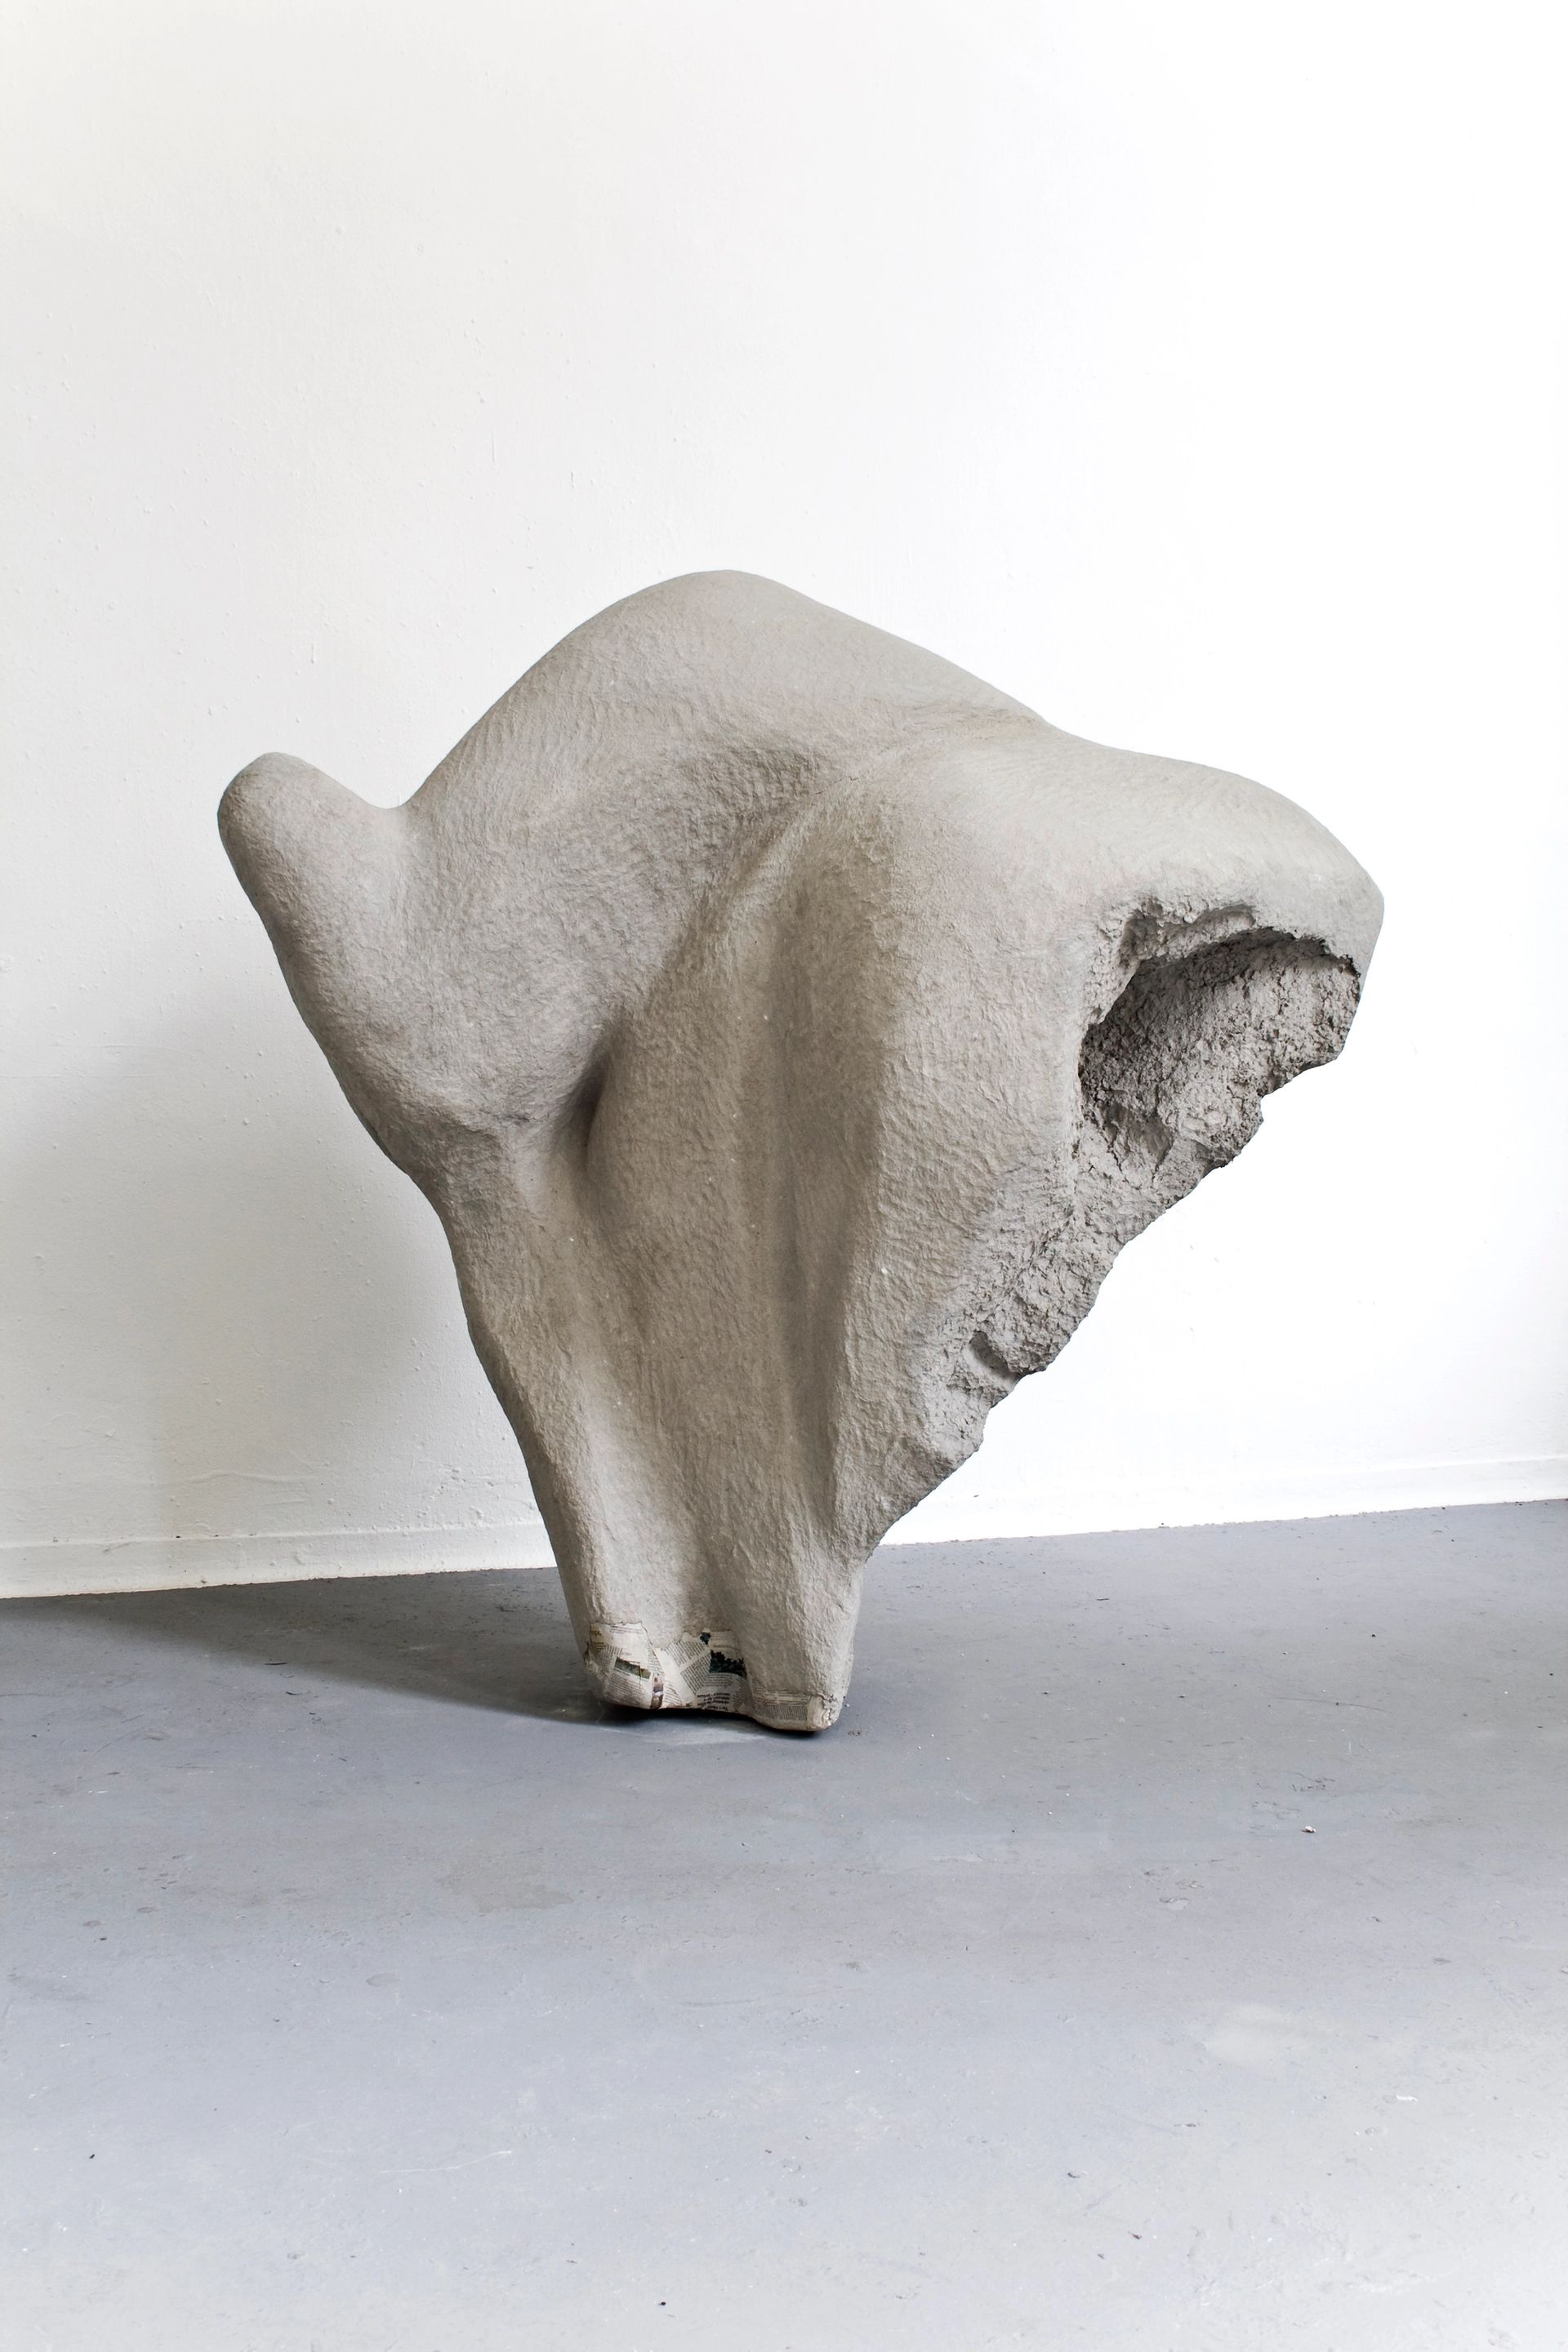 Ana Navas, Elegance (Sarah-Jane), 2014, styrofoam, papier mâché, acrylic, 150 × 165 × 115 cm